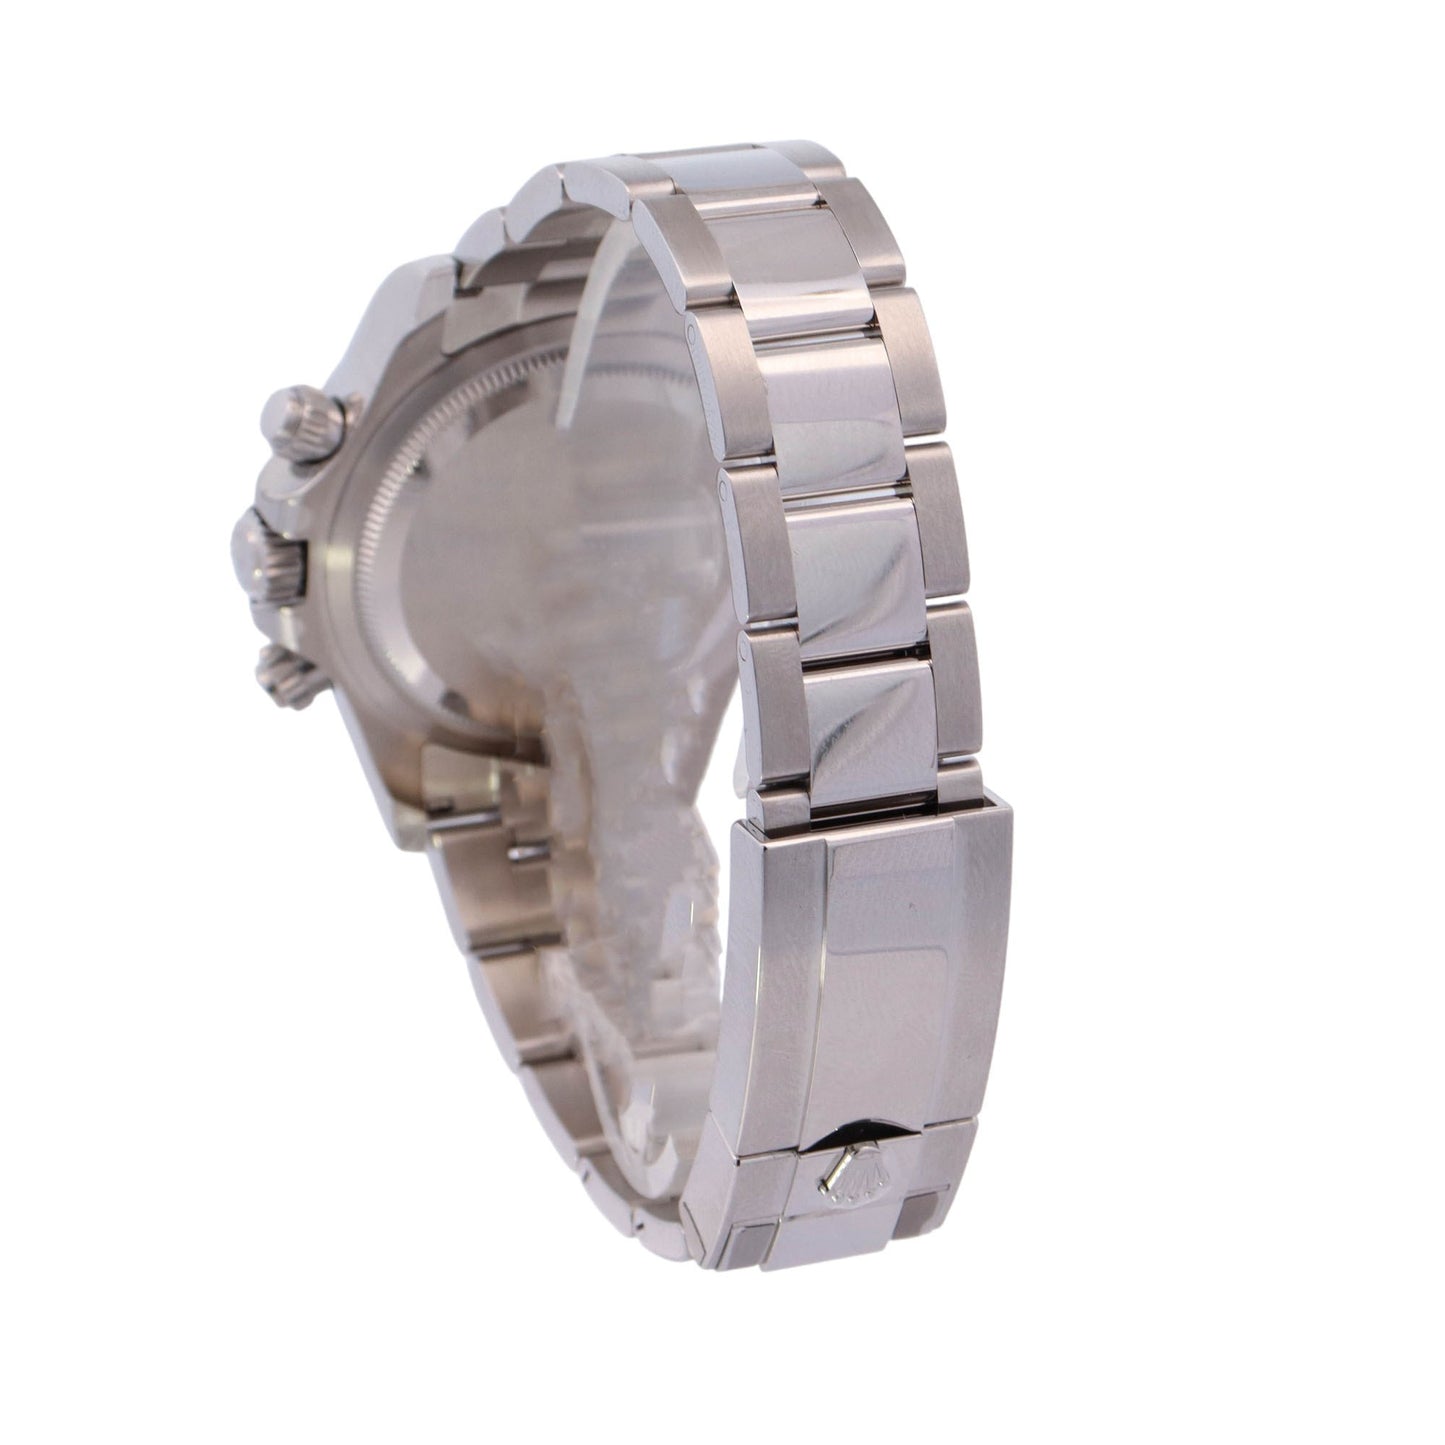 NEW! Rolex Daytona “Panda” Stainless Steel 40mm White Chronograph Dial Watch Reference# 126500LN - Happy Jewelers Fine Jewelry Lifetime Warranty